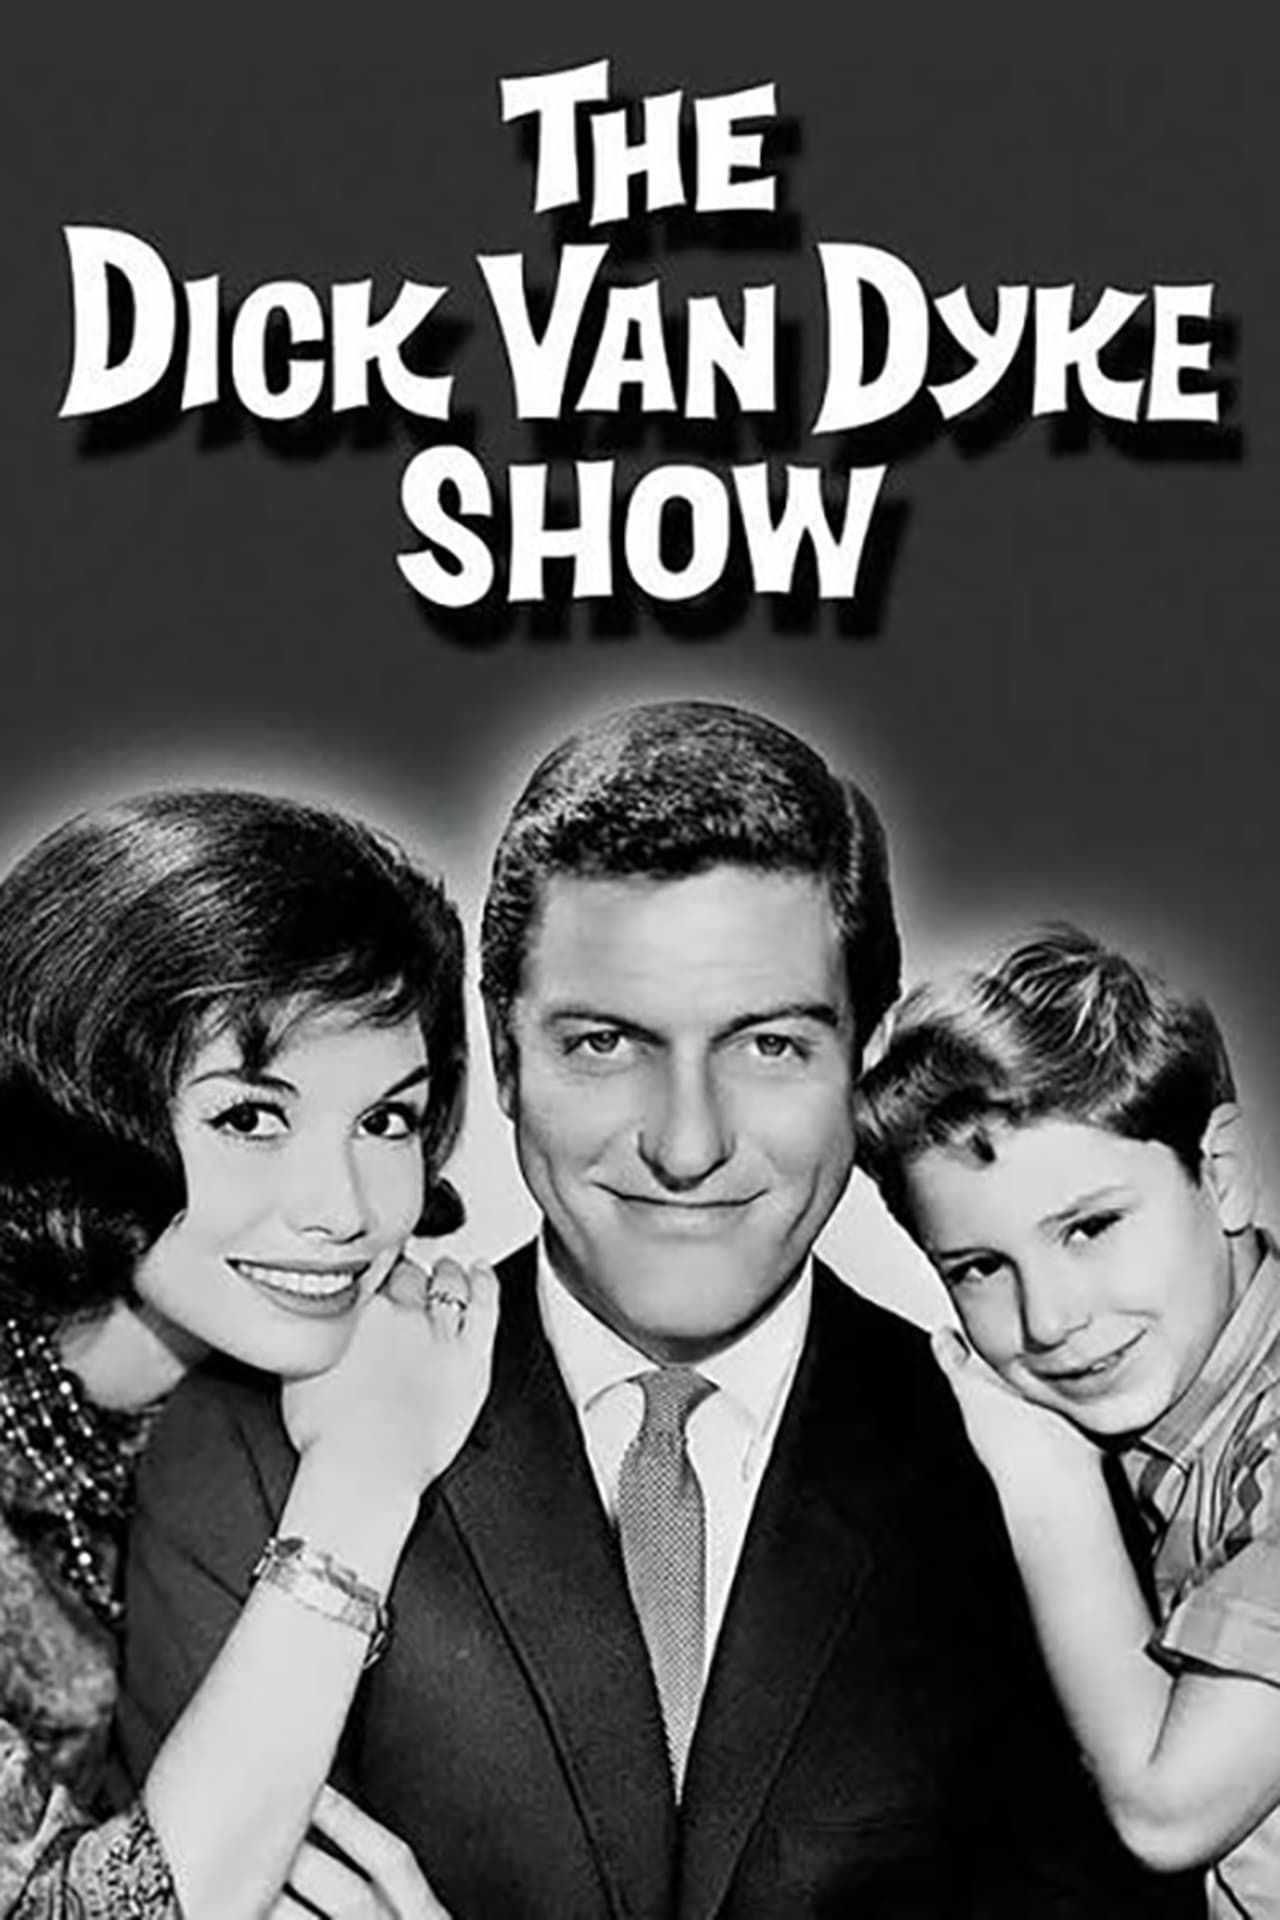 Dick.van dyke show